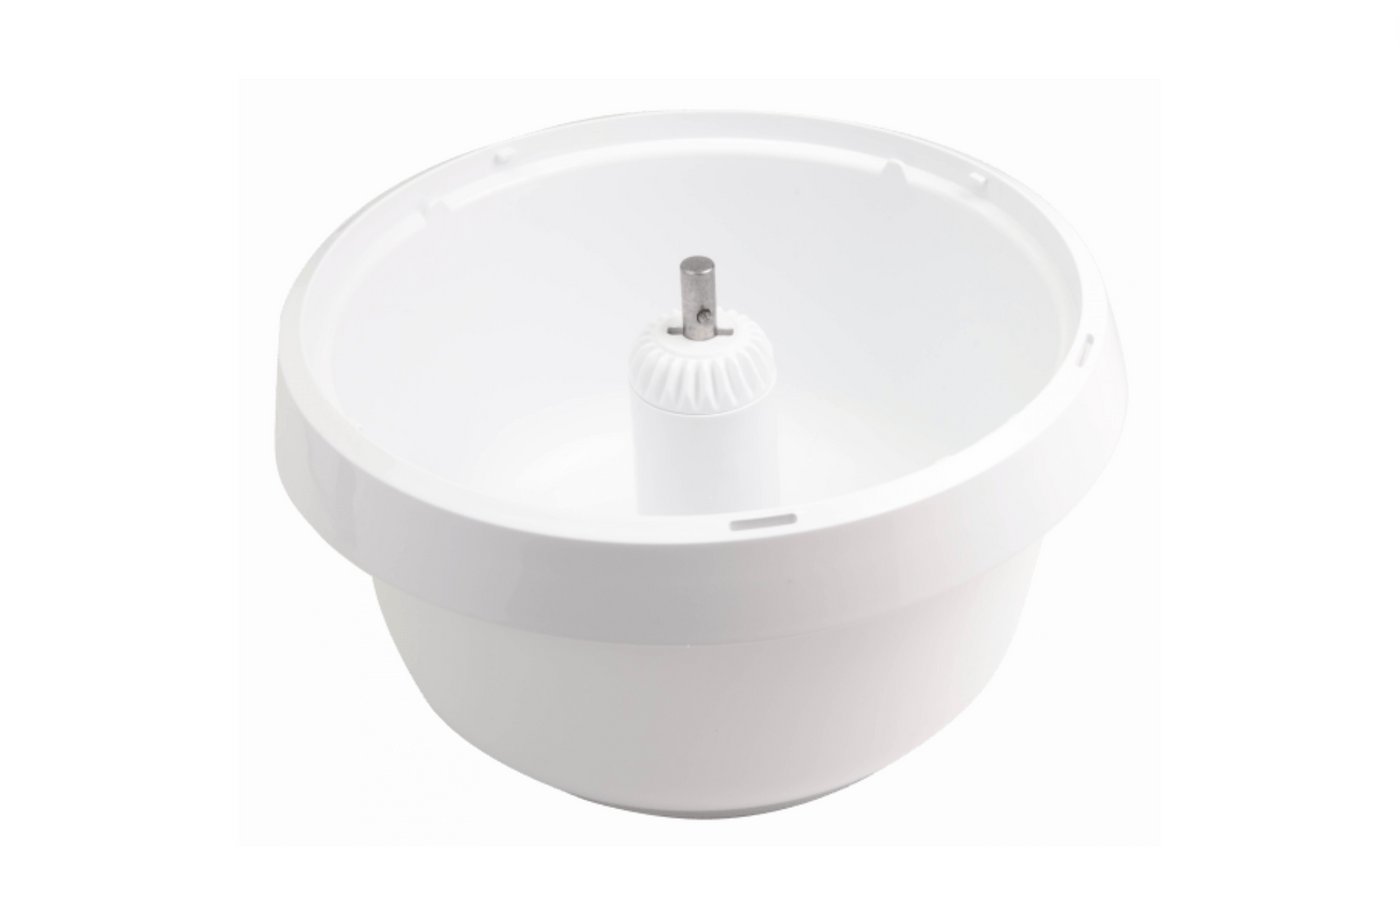 Bosch Universal Plus Bowl Without Splash Ring or Lid